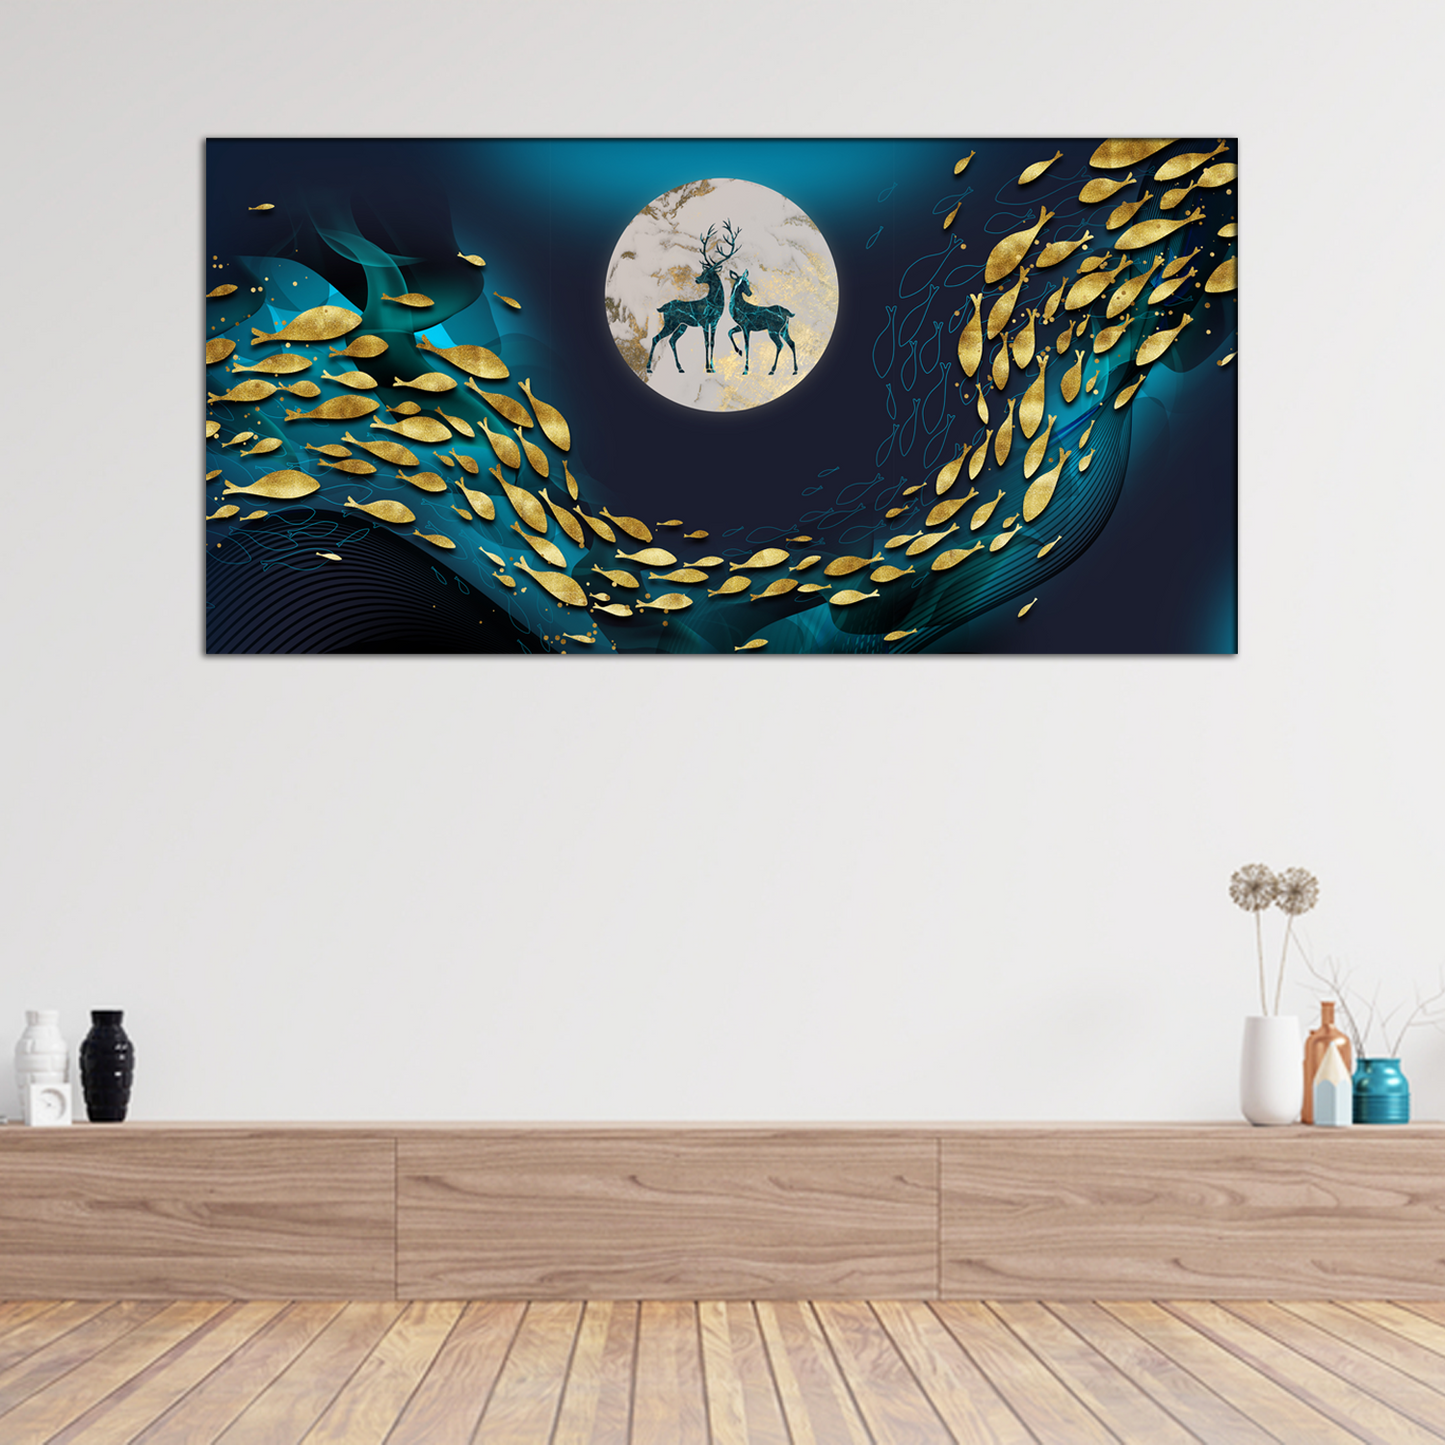 Fish, Deer and  Moon Canvas Print Wall Painting